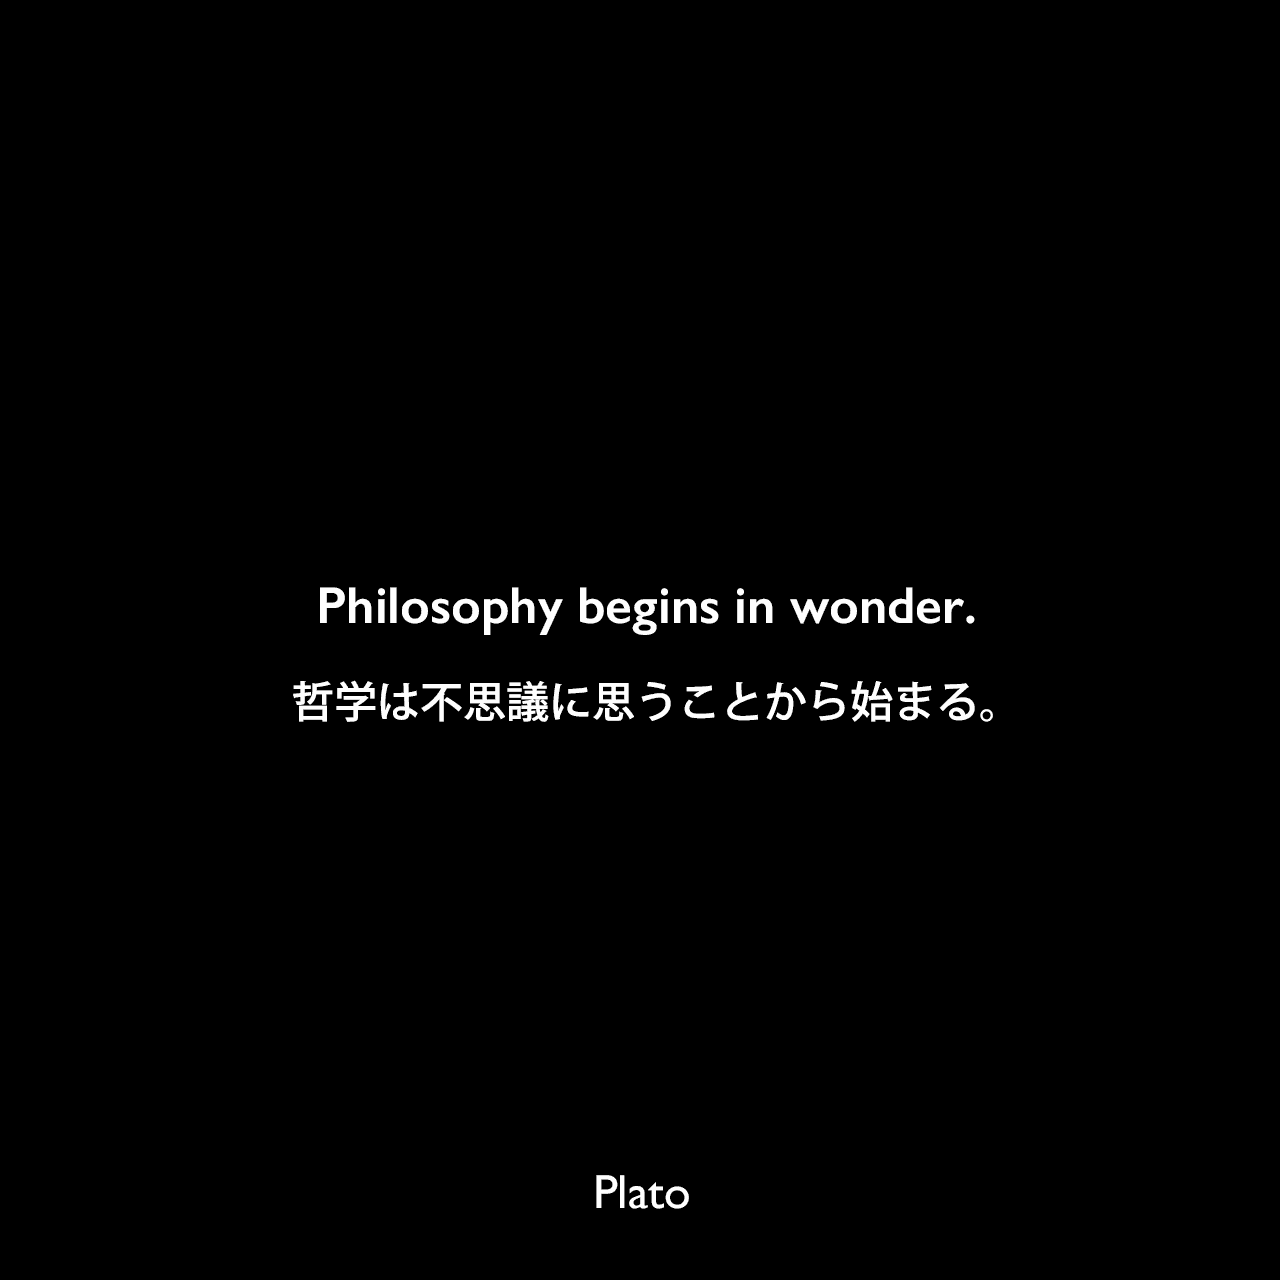 Philosophy begins in wonder.哲学は不思議に思うことから始まる。- プラトンの著書「テアイテトス」よりPlato